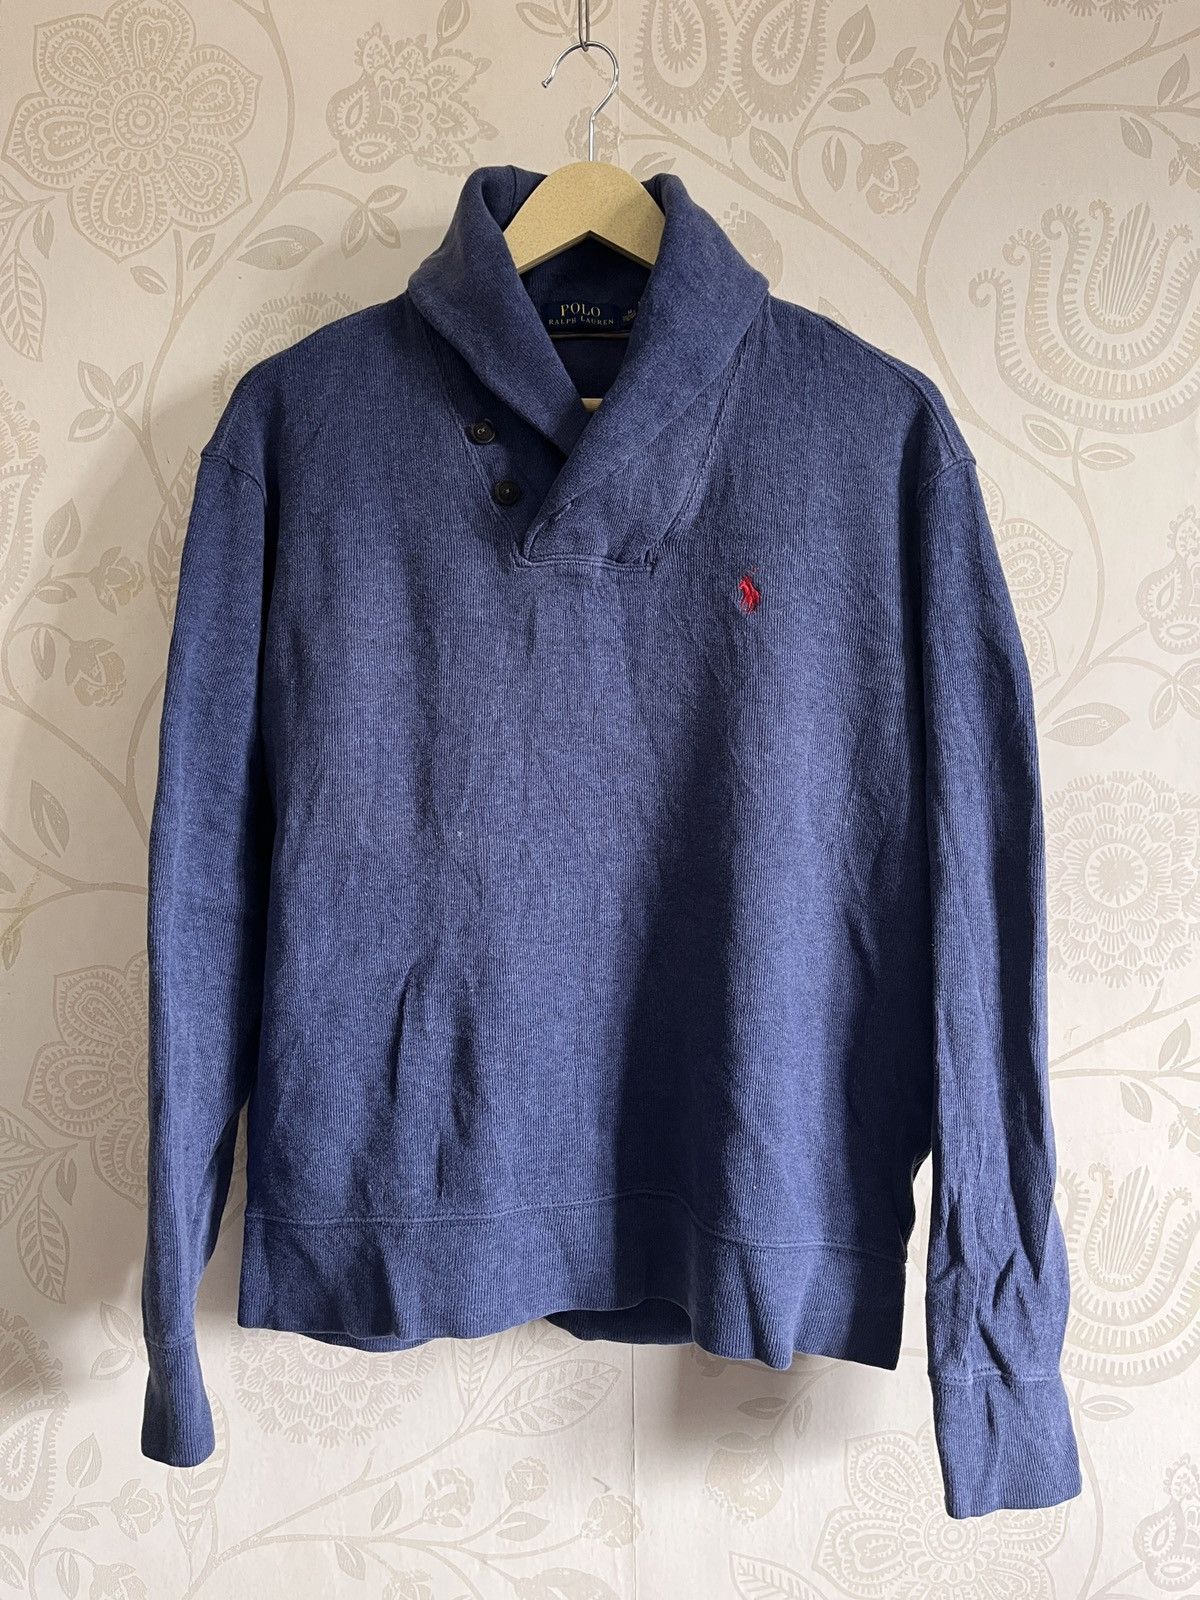 Vintage Polo Ralph Lauren Jumper Sweater - 19